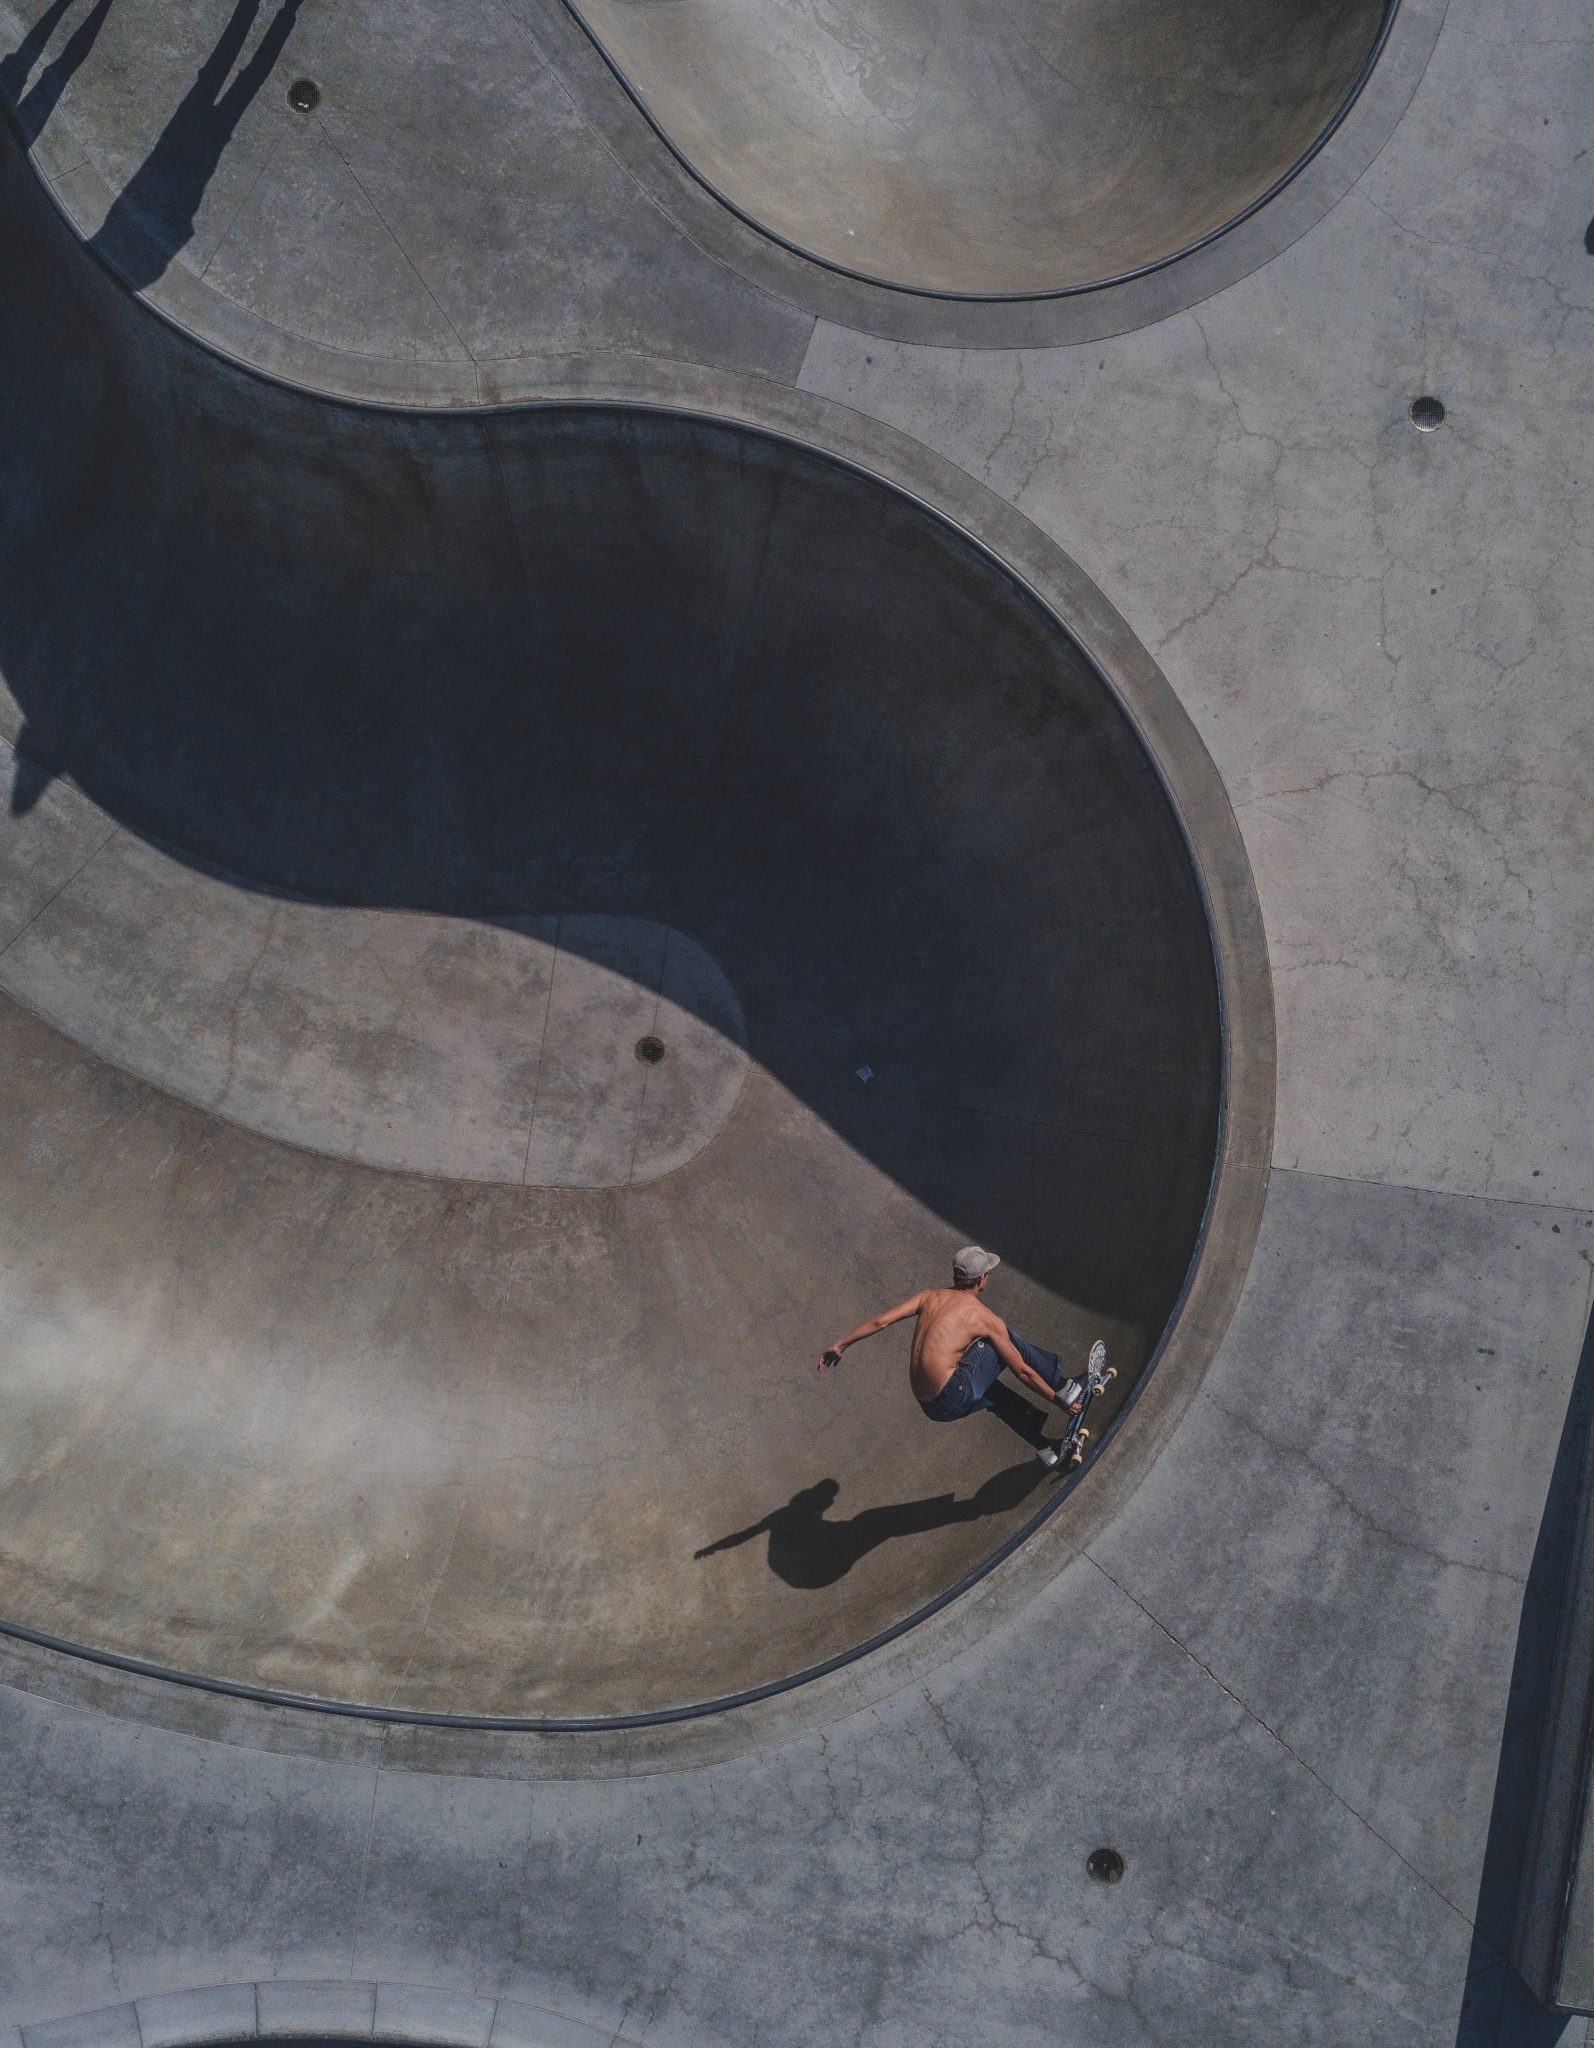 Skateboarder aerial view of man riding skateboard